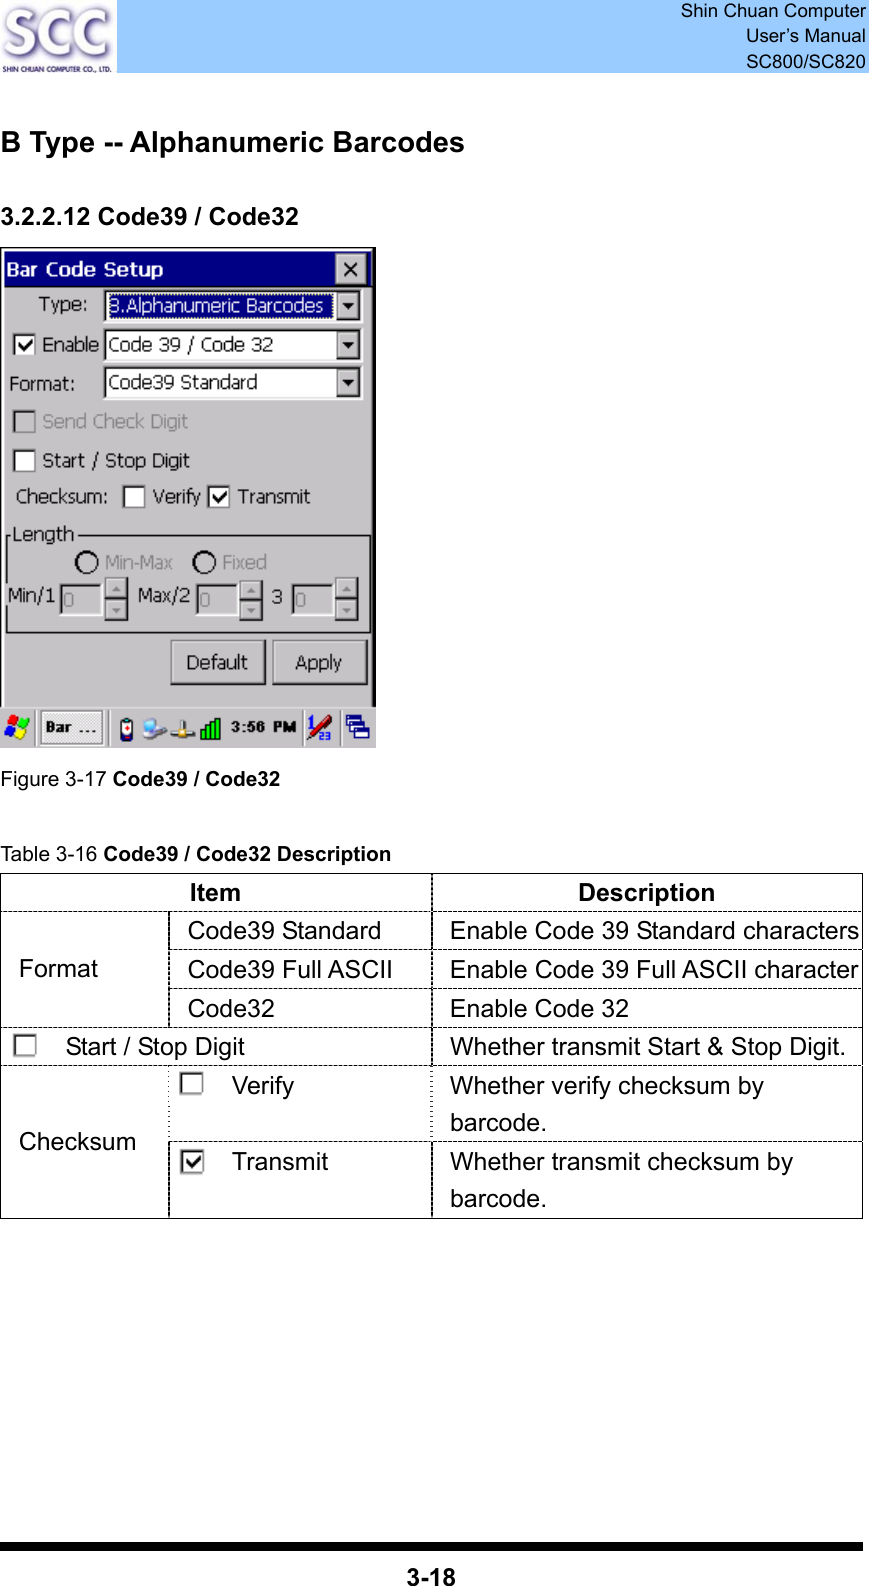  Shin Chuan Computer User’s Manual SC800/SC820  3-18  B Type -- Alphanumeric Barcodes  3.2.2.12 Code39 / Code32  Figure 3-17 Code39 / Code32  Table 3-16 Code39 / Code32 Description Item Description Code39 Standard  Enable Code 39 Standard charactersCode39 Full ASCII  Enable Code 39 Full ASCII characterFormat Code32  Enable Code 32 Start / Stop Digit  Whether transmit Start &amp; Stop Digit.Verify  Whether verify checksum by barcode. Checksum  Transmit  Whether transmit checksum by barcode.        